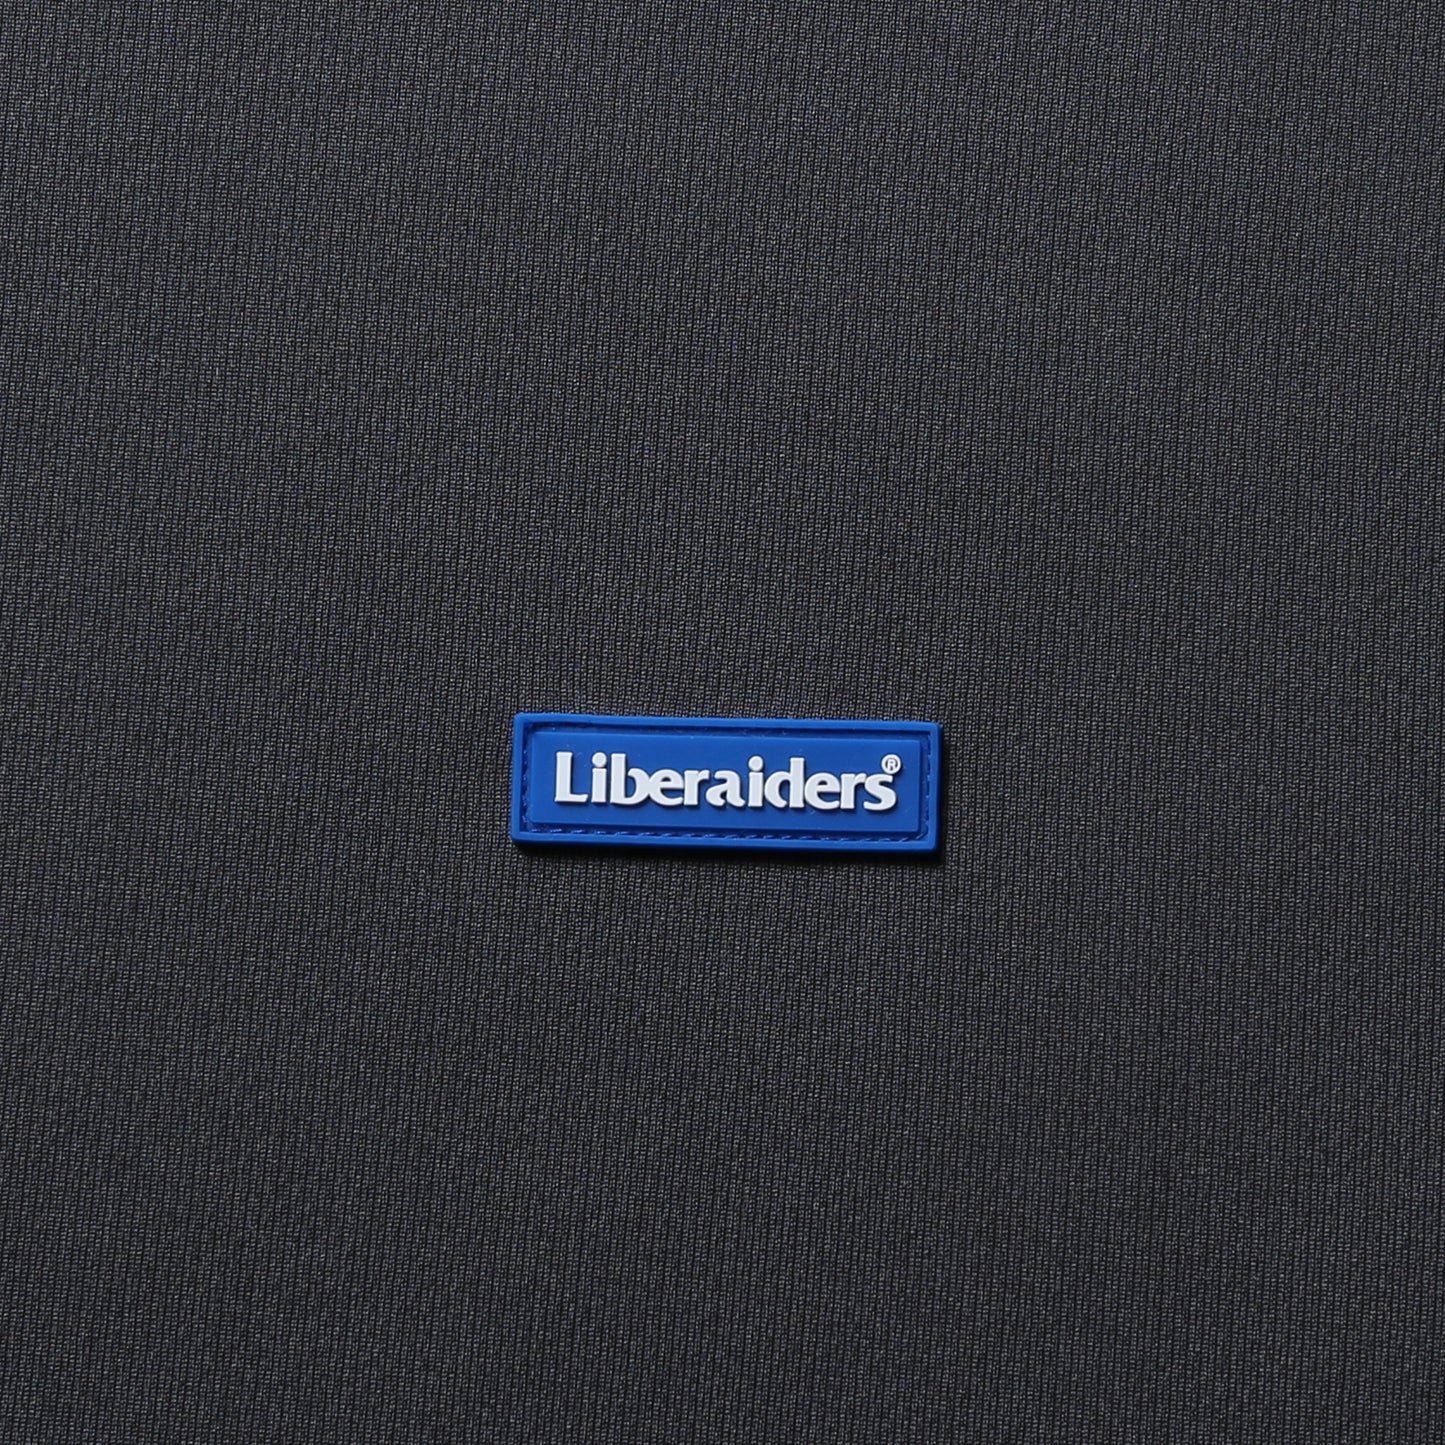 Liberaiders ®(リベレイダース) /OG LOGO L/S DRY TEE 70505 / GRAY